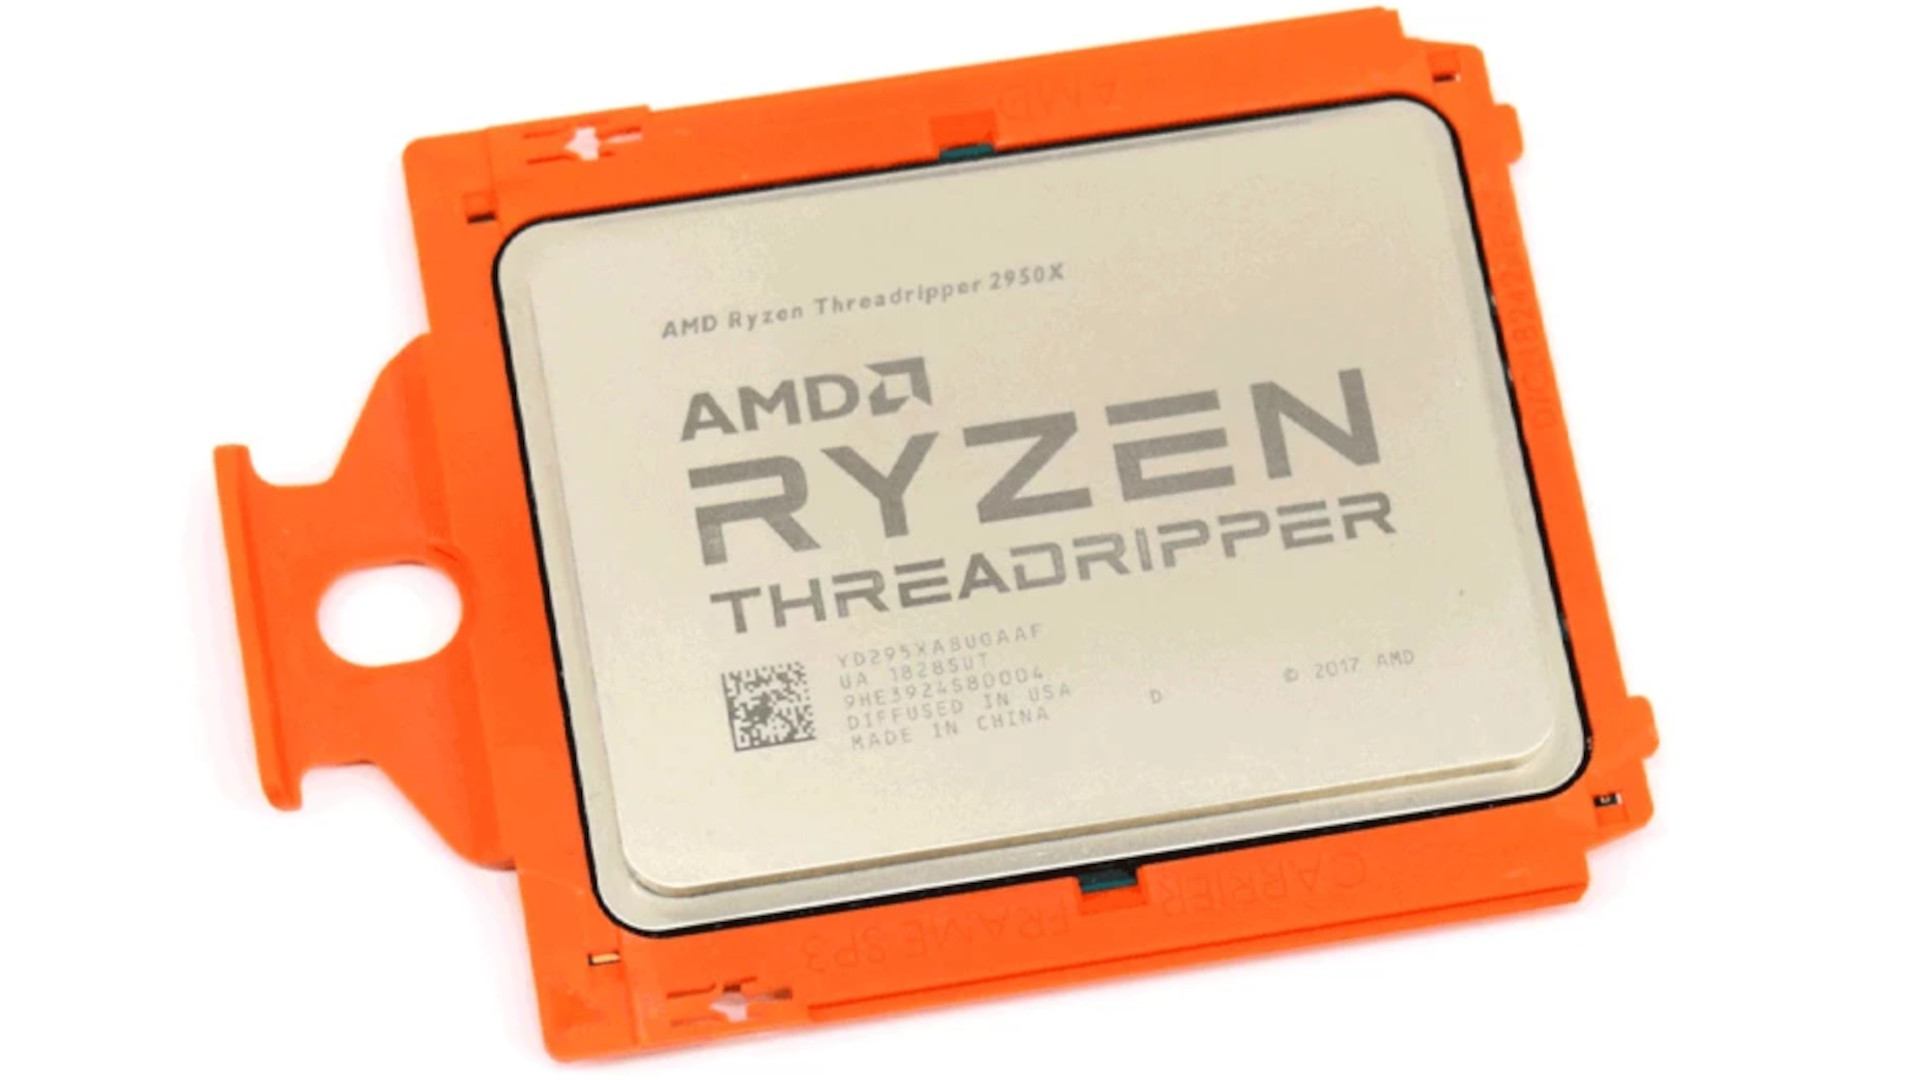 AMD Ryzen TR 2950X 3